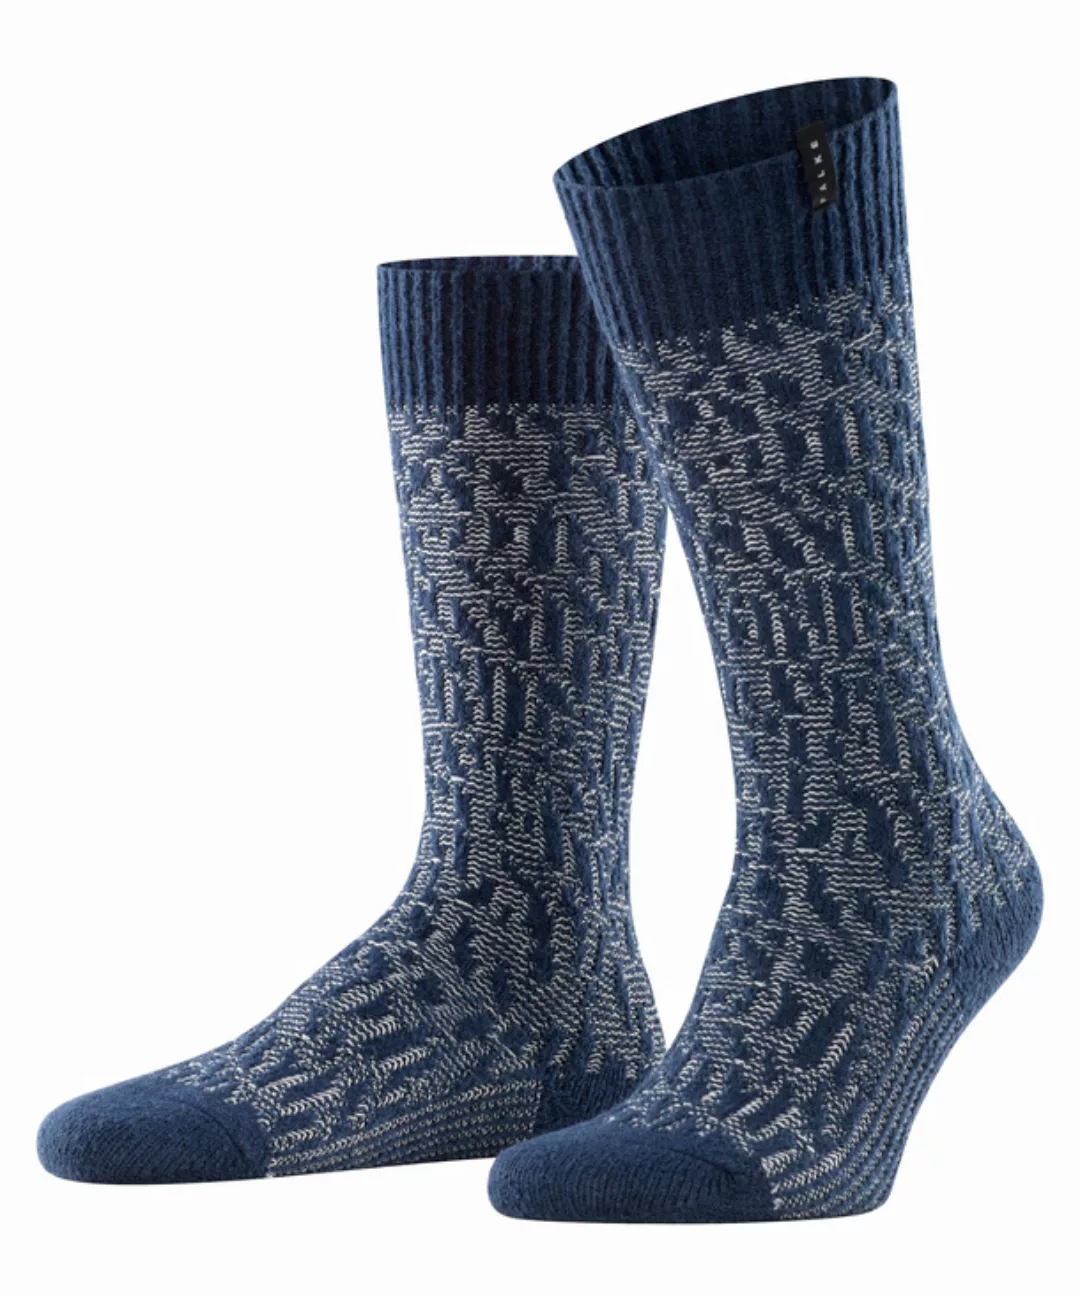 FALKE Fleece Herren Socken, 39-42, Blau, Struktur, Baumwolle, 12478-634002 günstig online kaufen